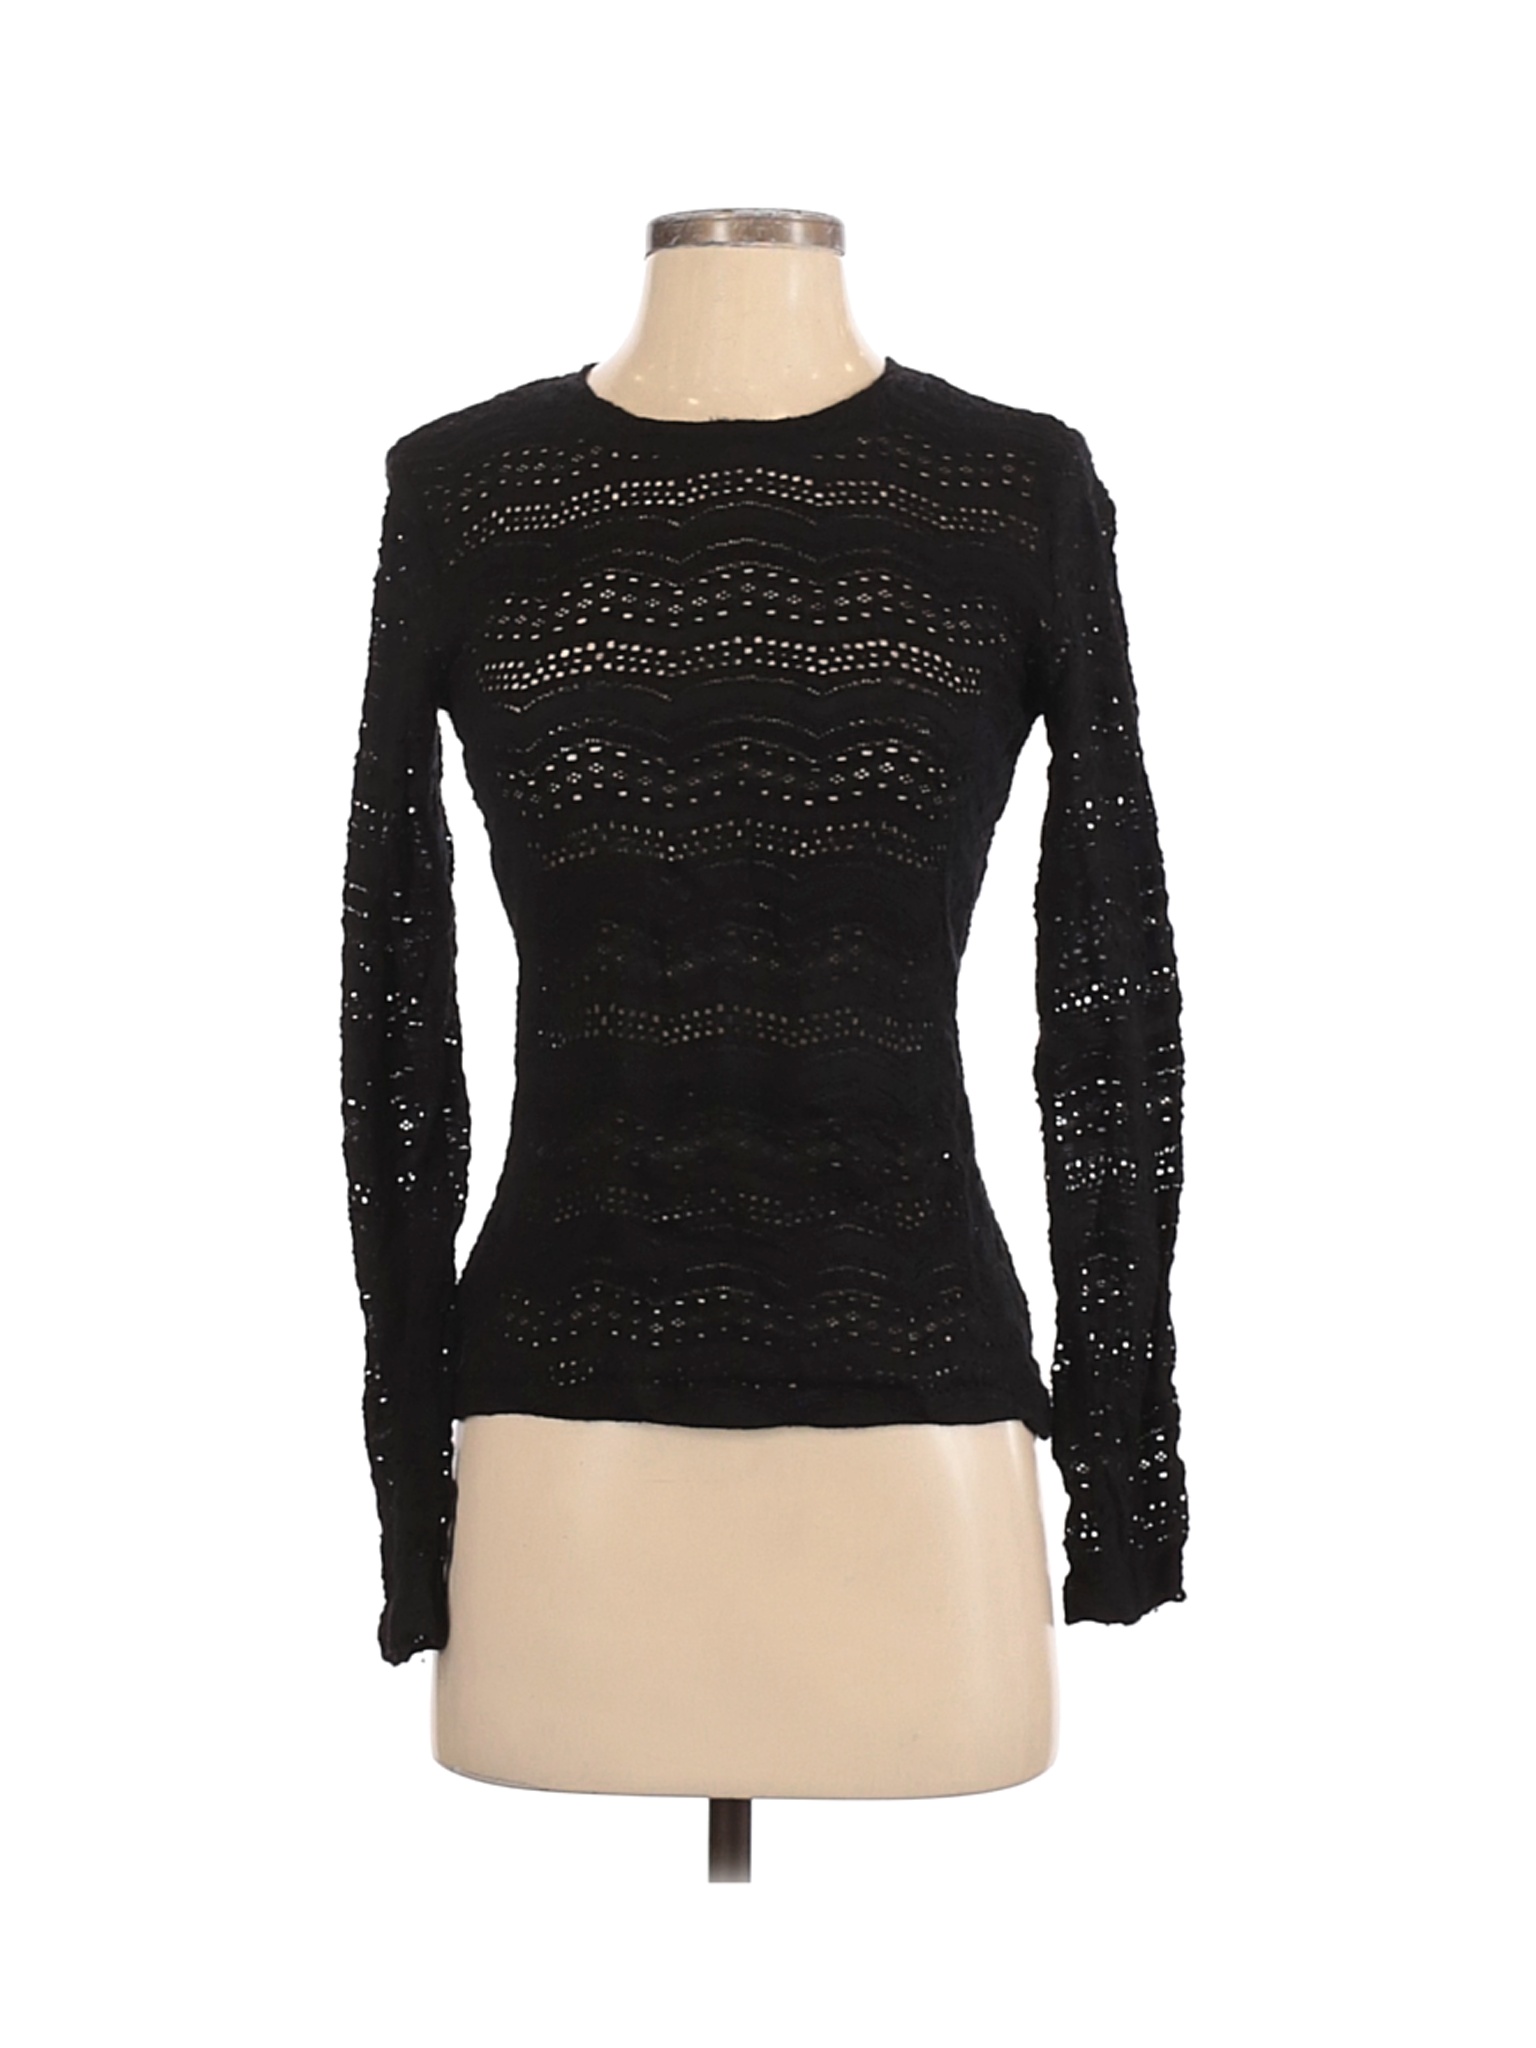 CATHERINE Catherine Malandrino Women Black Pullover Sweater S | eBay